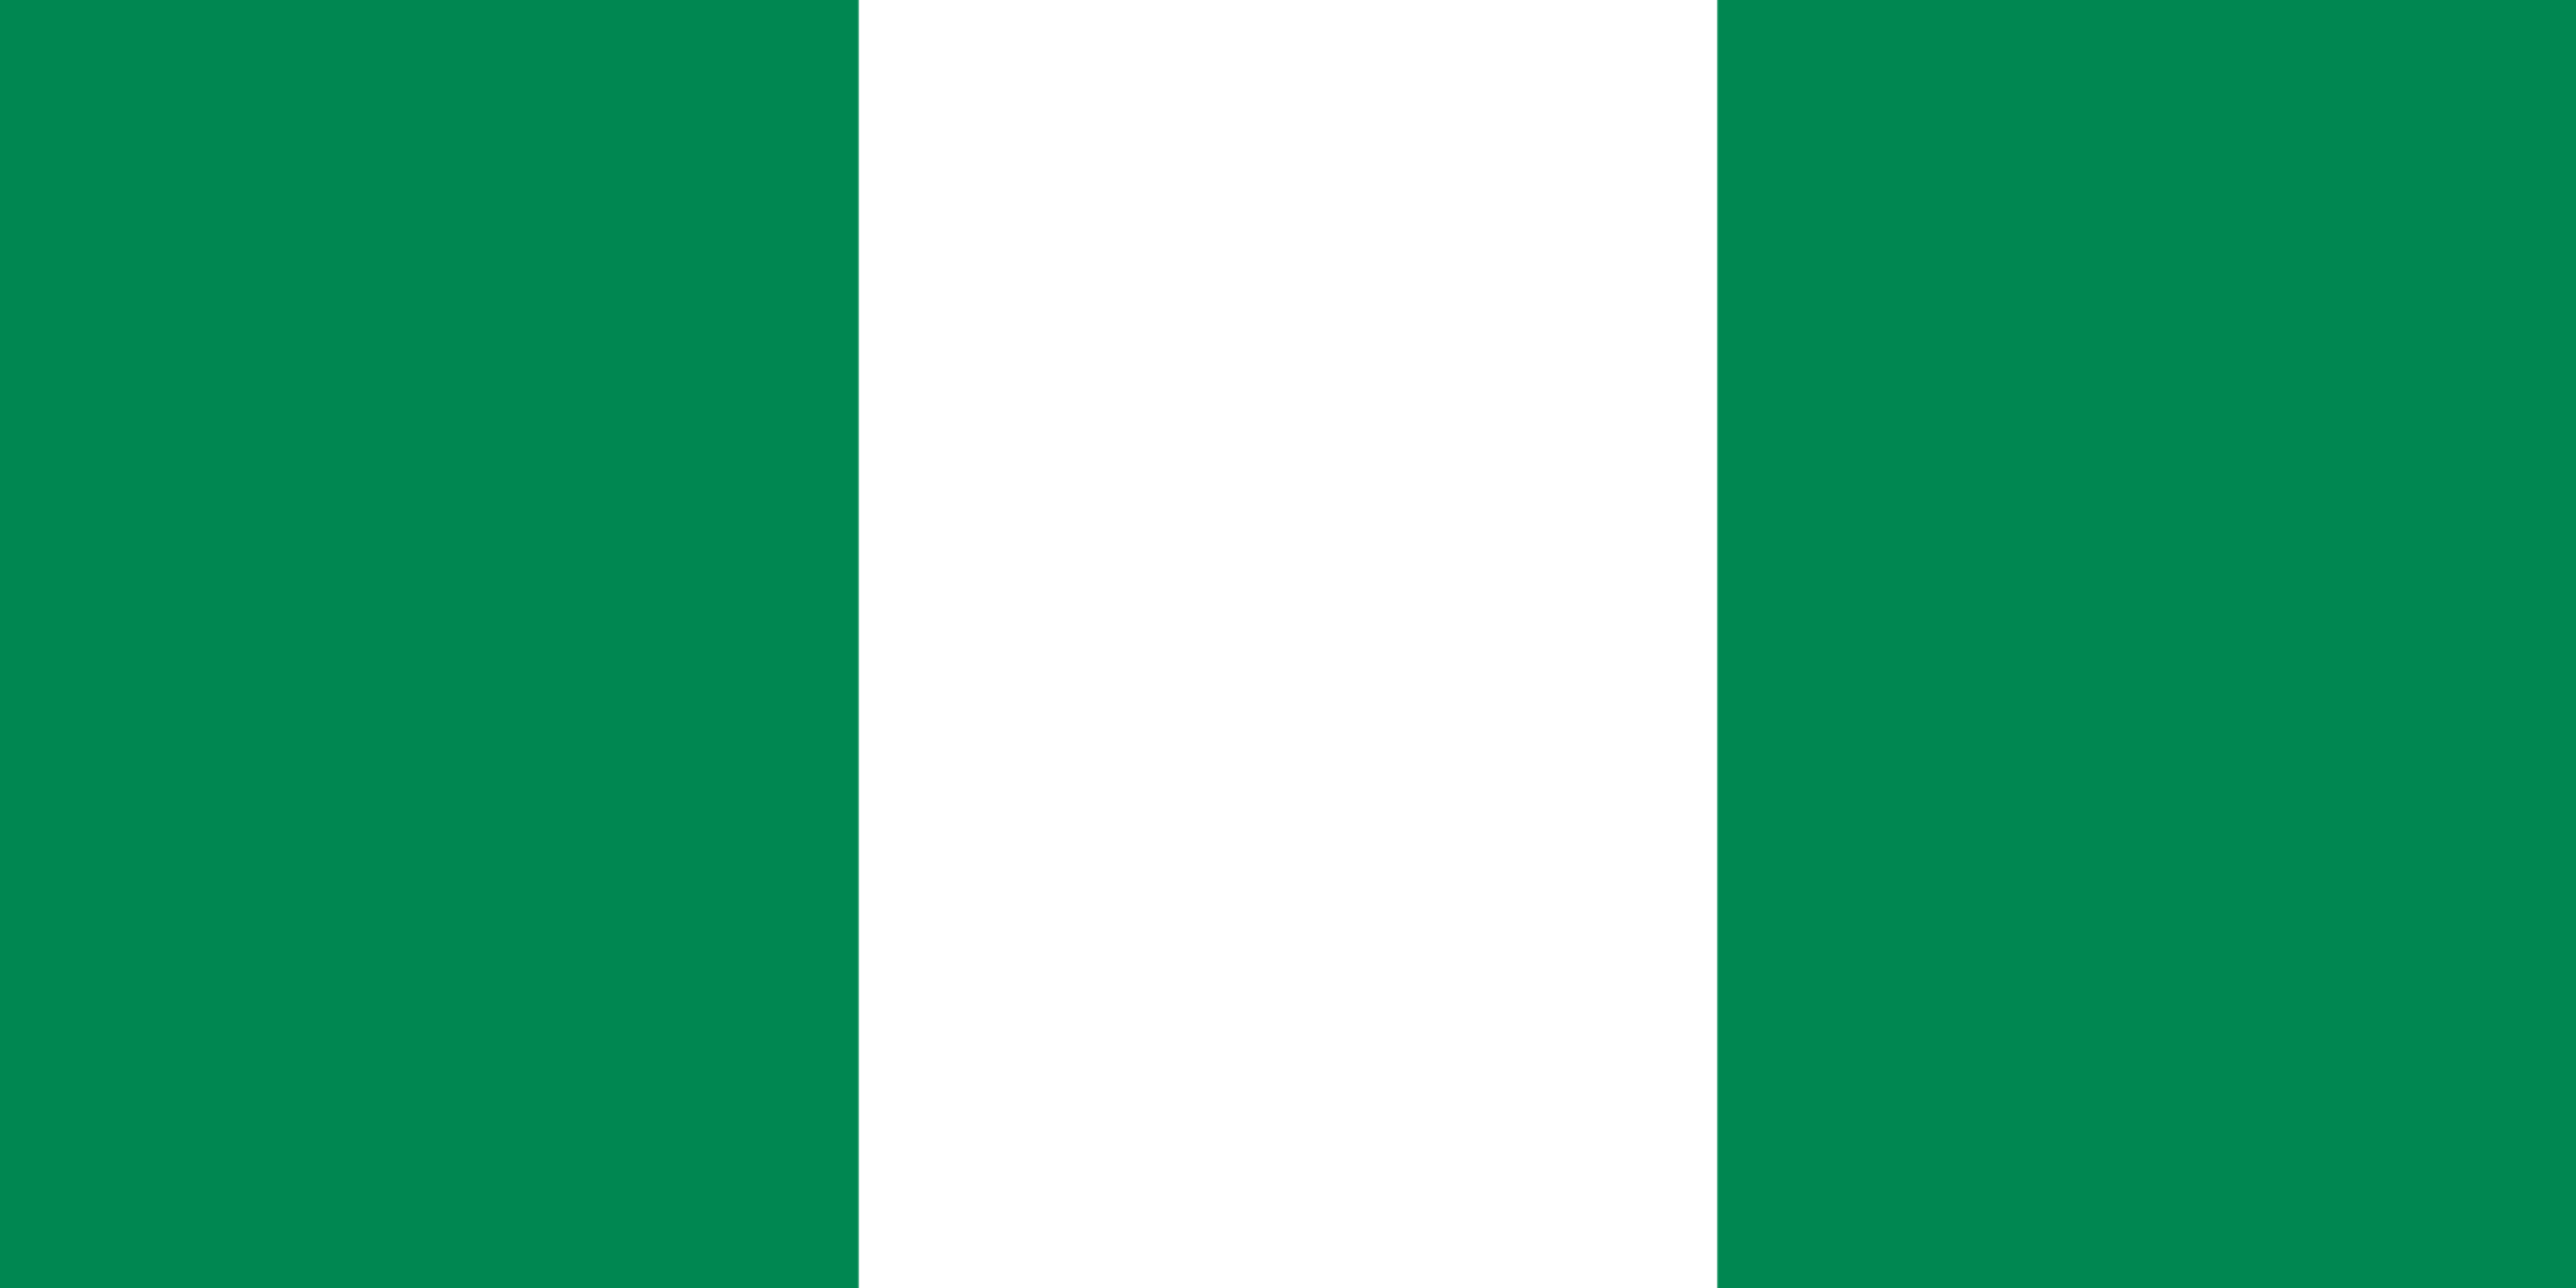 Nigeria Flag main image